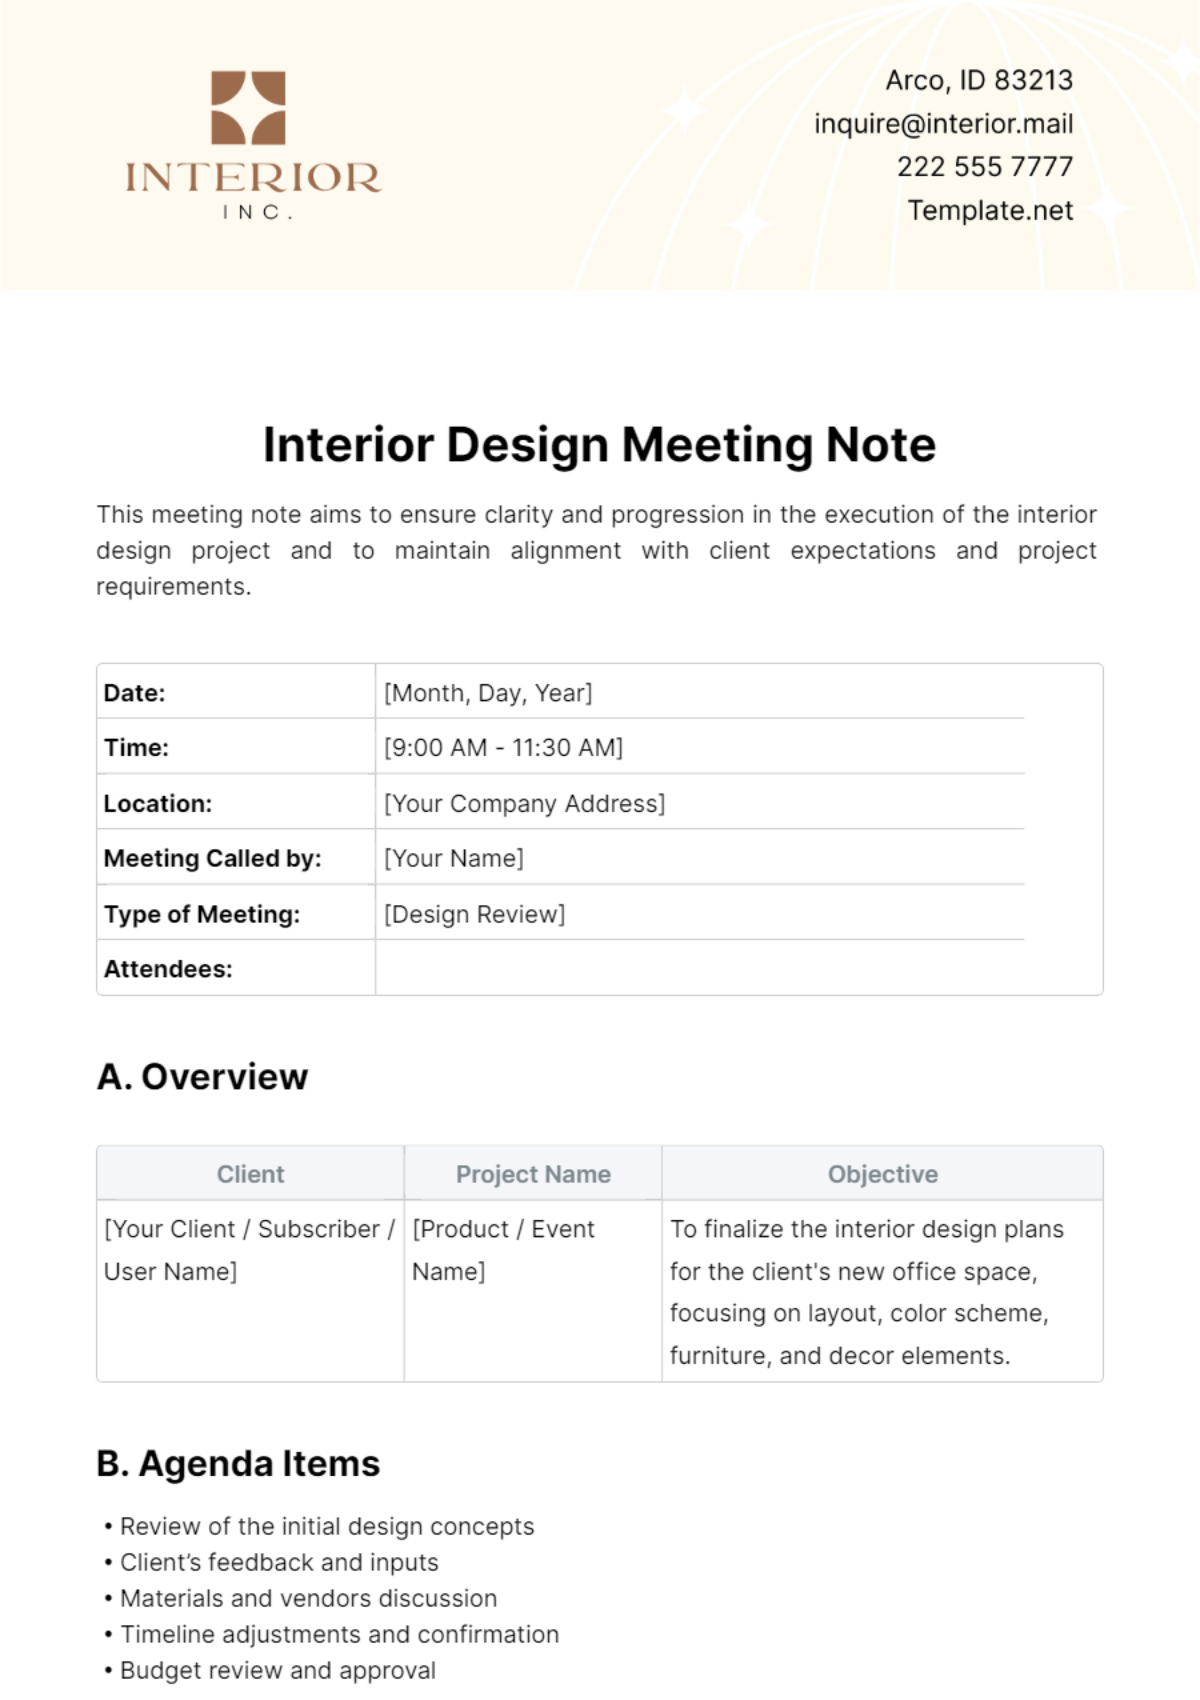 Interior Design Meeting Note Template